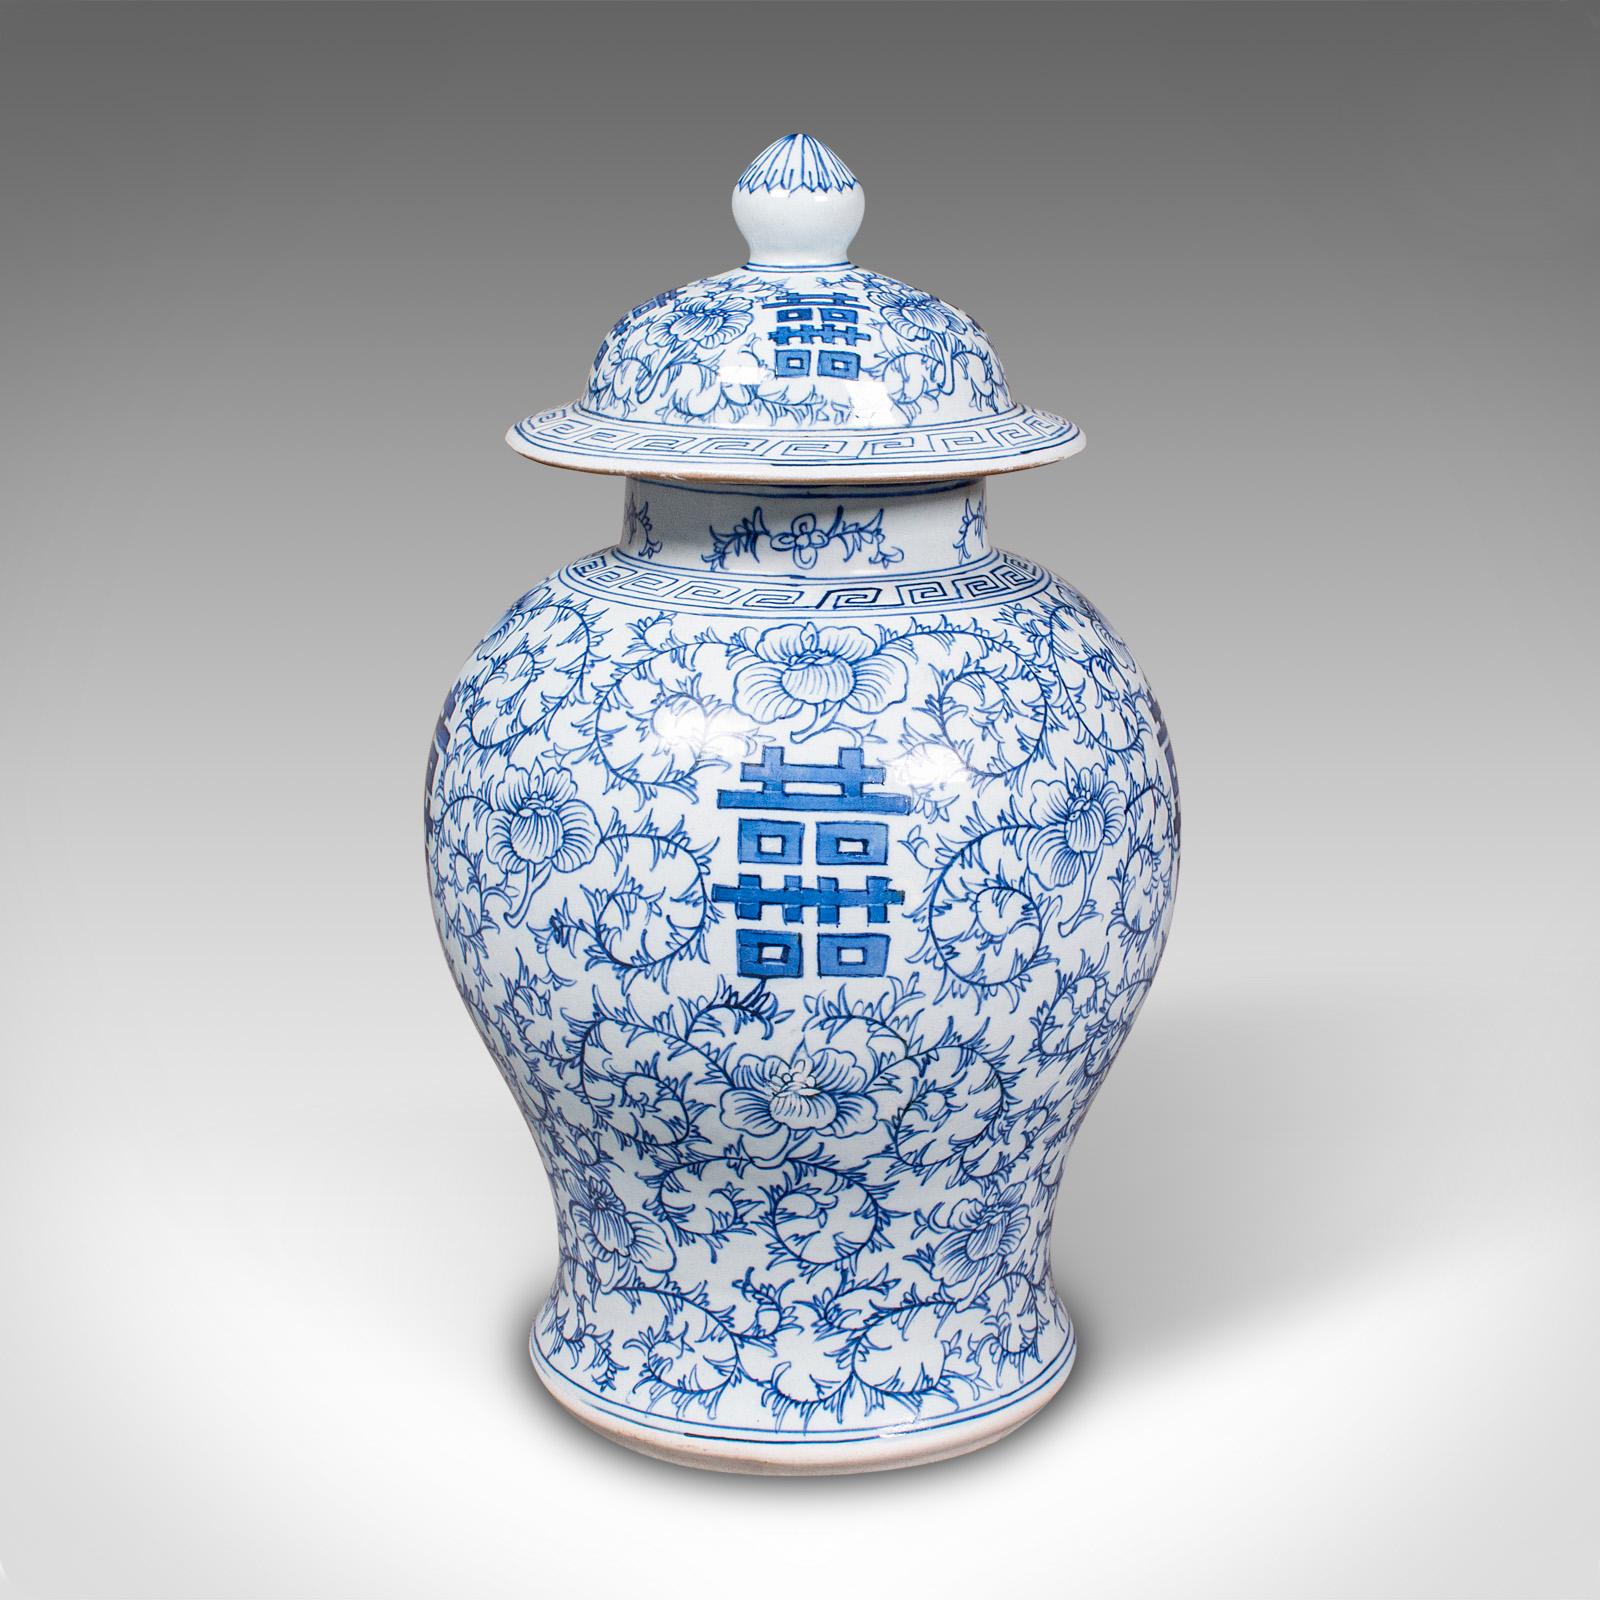 Vintage Decorative Flower Vase, Chinese, Ceramic, Urn, Spice Jar, Art Deco, 1930 In Good Condition For Sale In Hele, Devon, GB